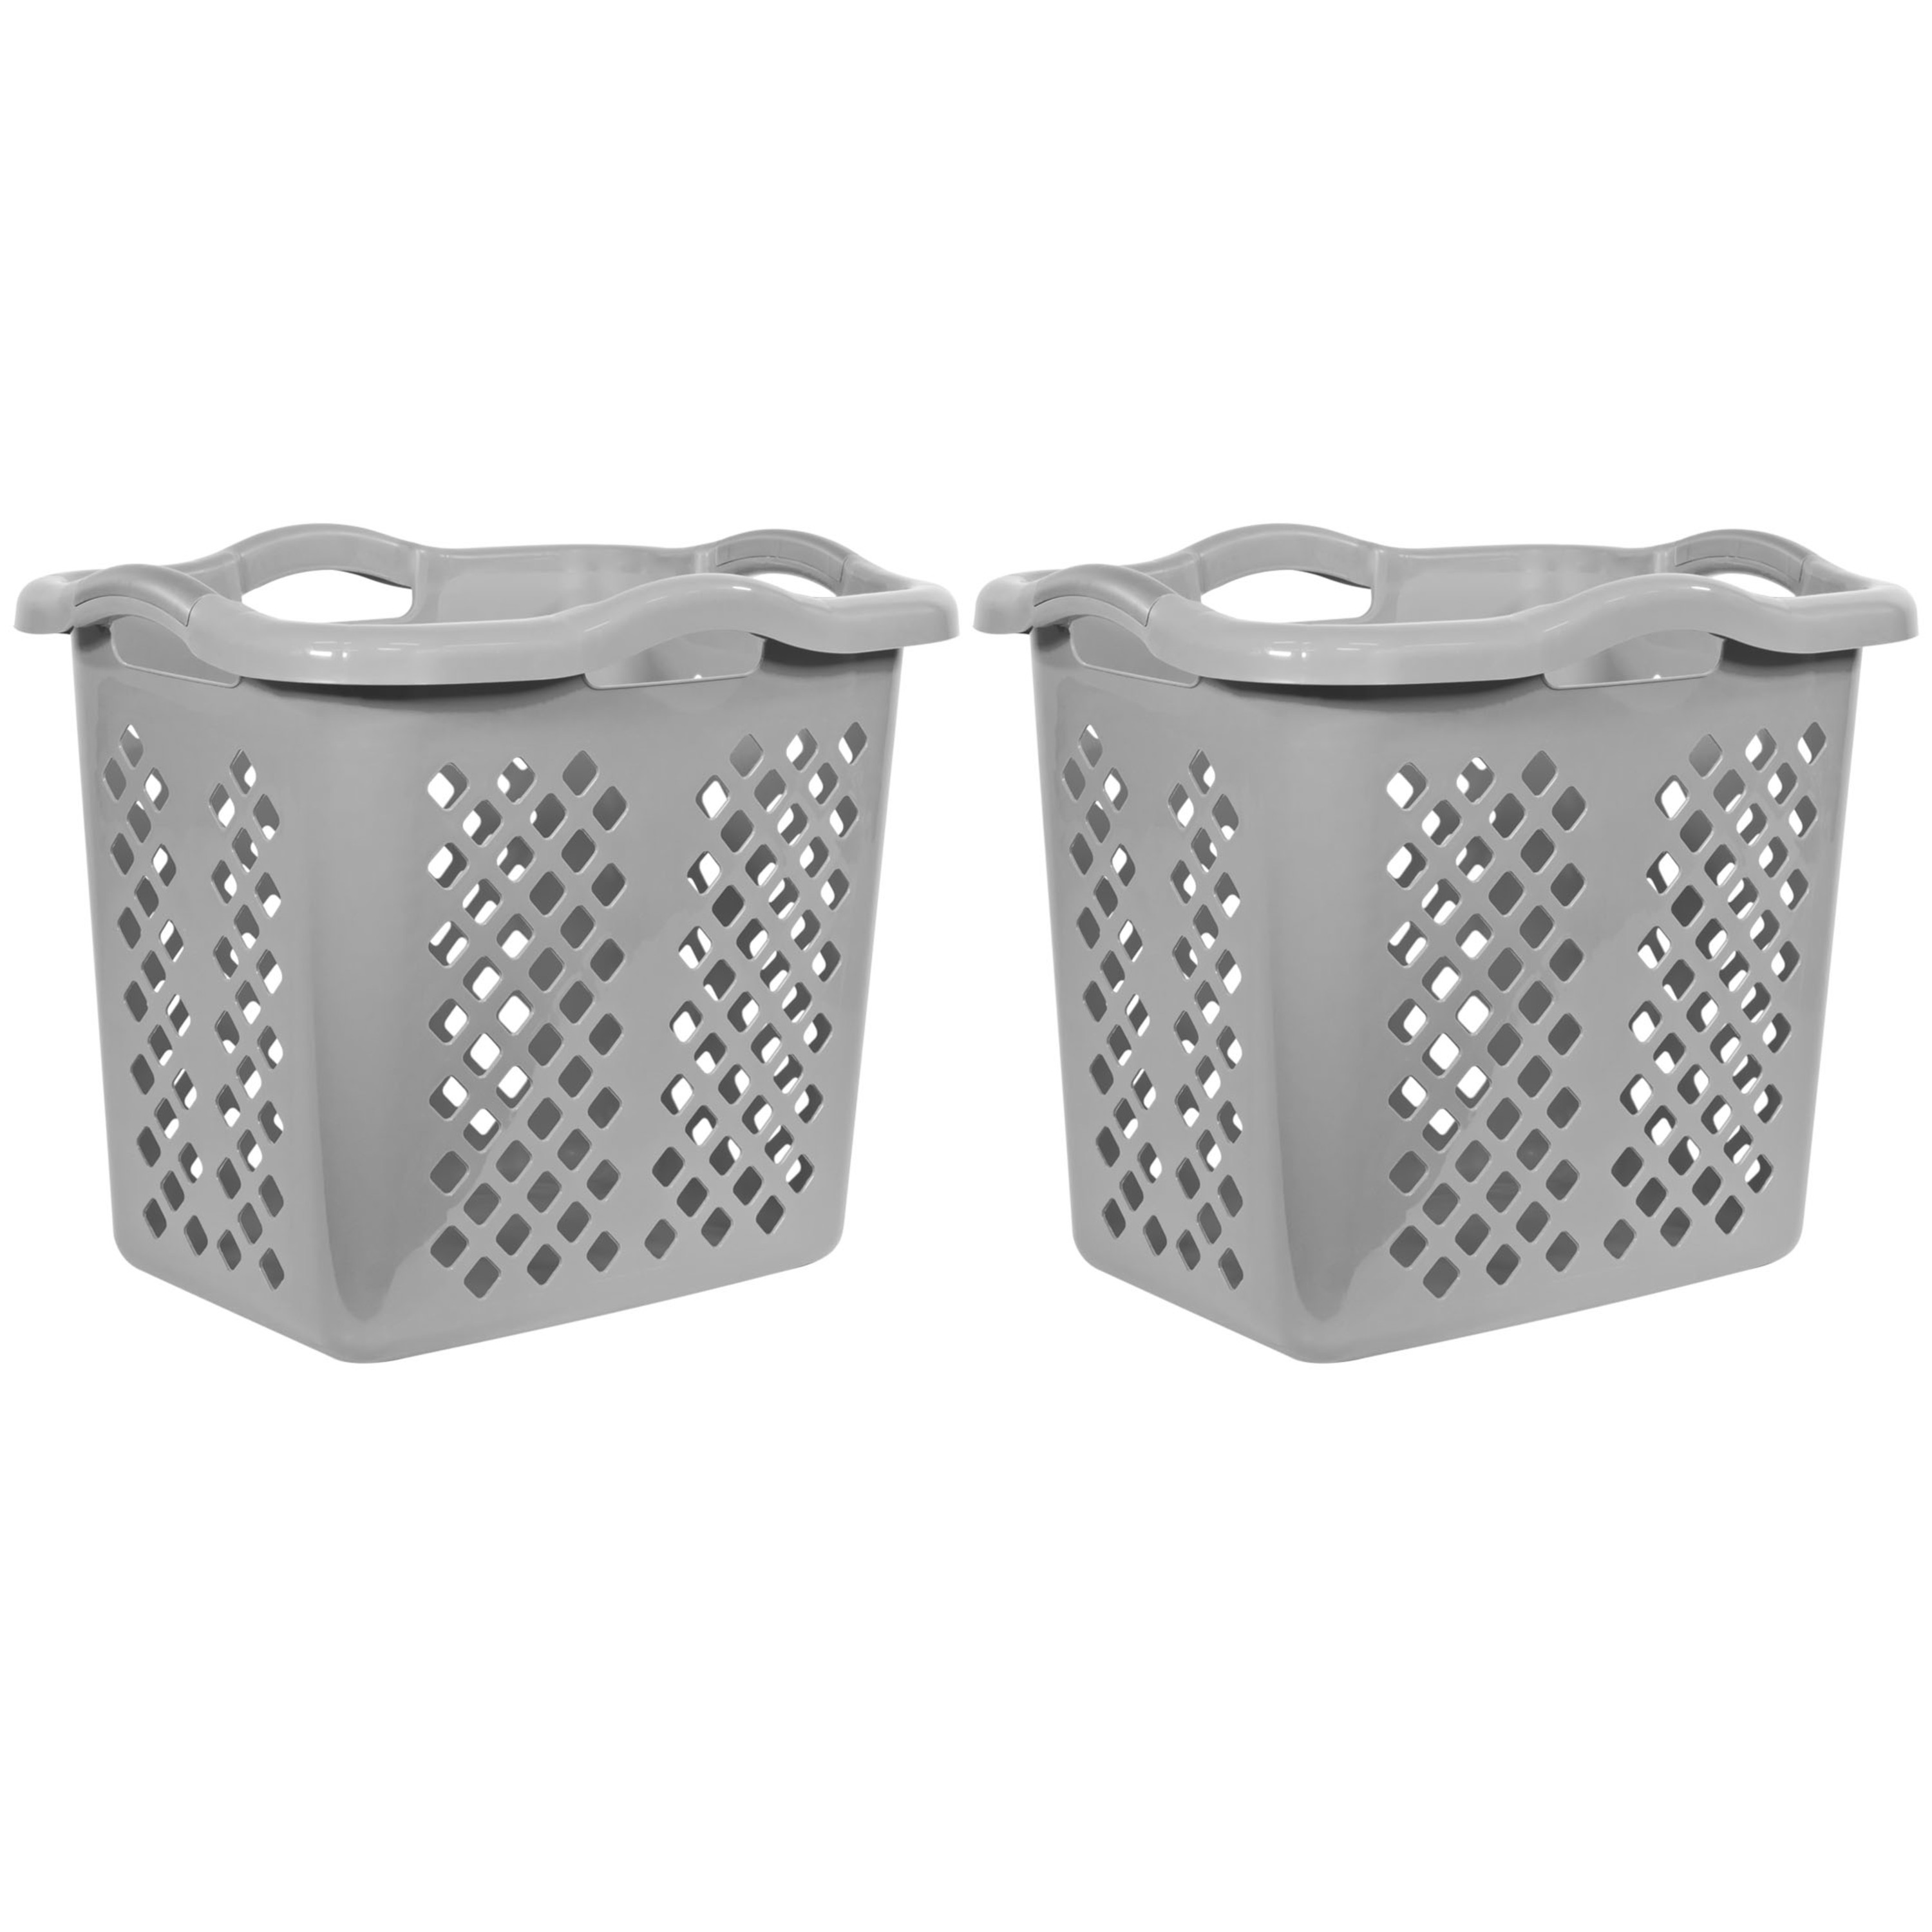 Home Logic 2 Bushel Lamper Plastic Laundry Basket with Silver Handles, Gray, 2 Pack - image 1 of 1